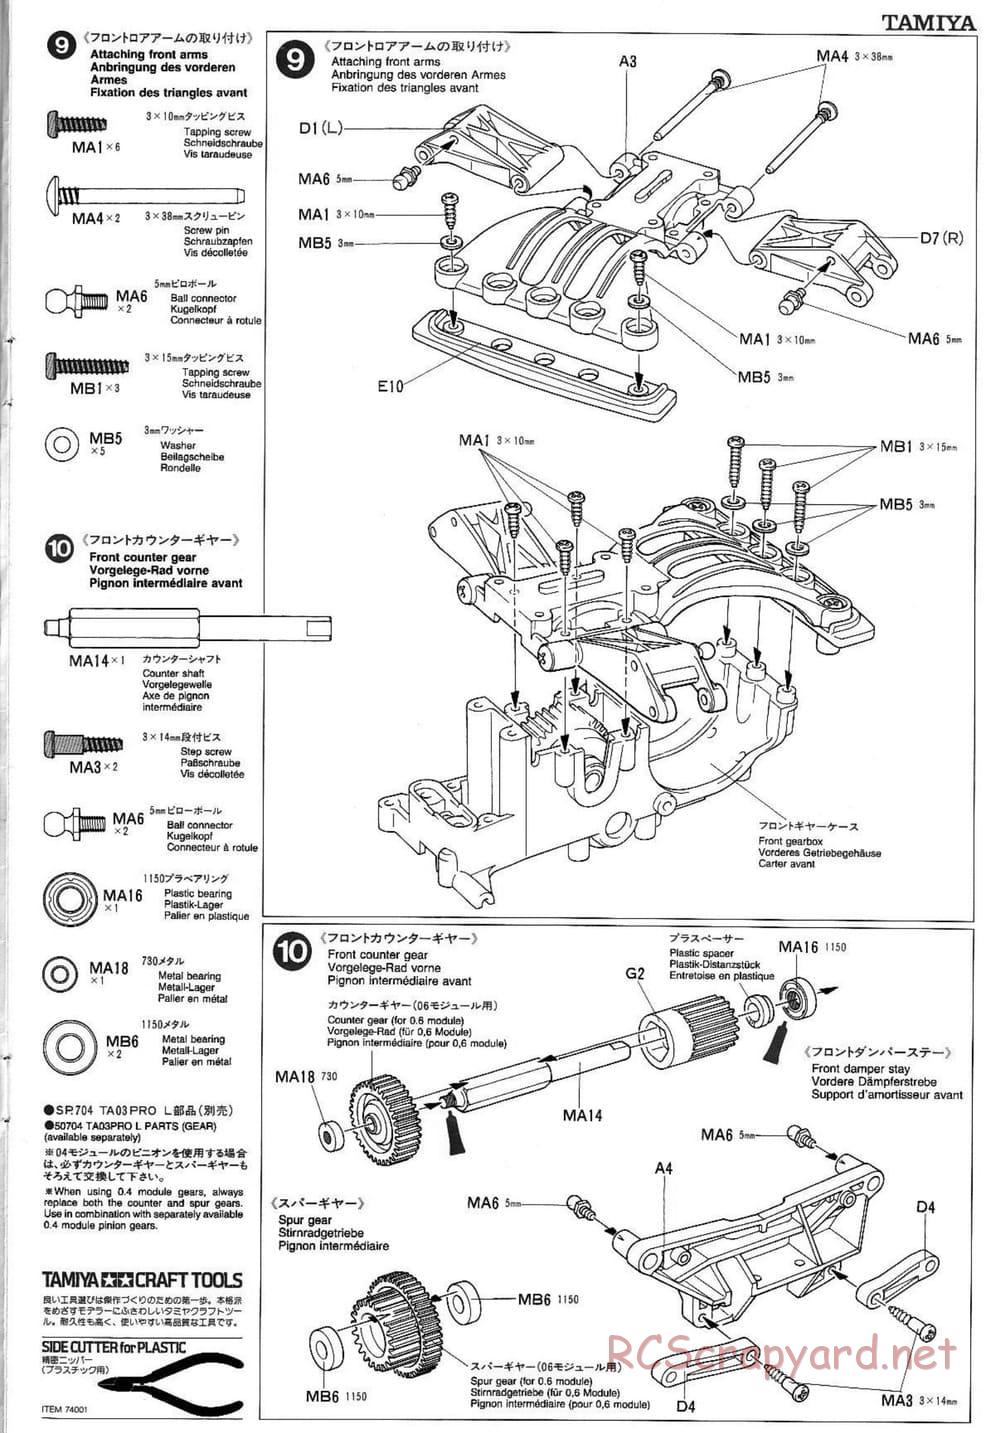 Tamiya - Mitsubishi Lancer Evolution V WRC - TA-03F Chassis - Manual - Page 7